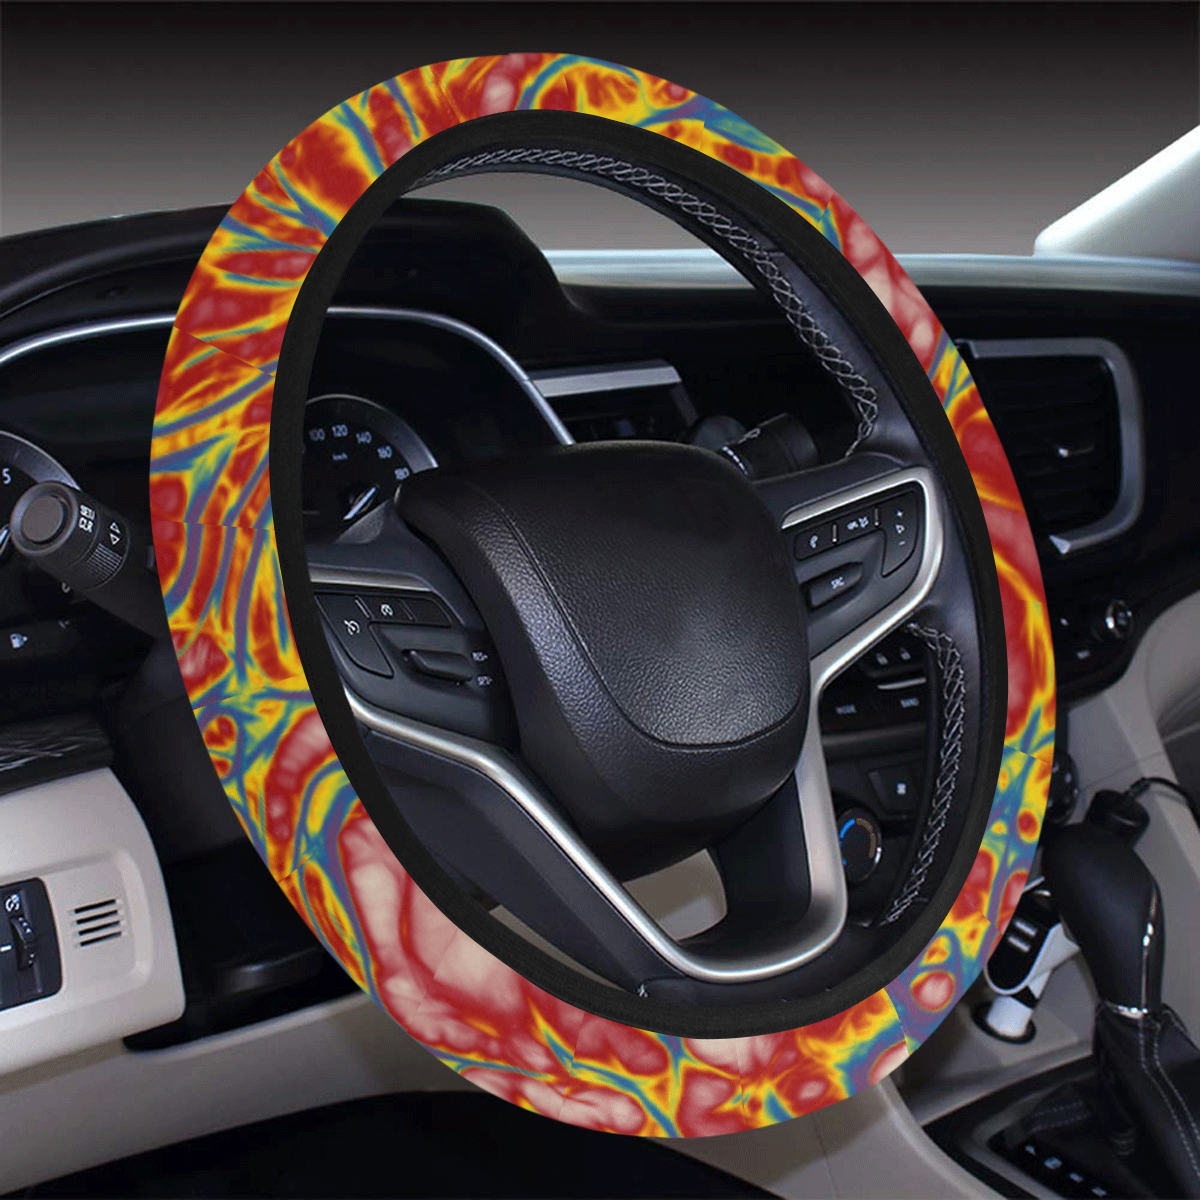 Fractal Batik ART - Hippie Blue Branches Steering Wheel Cover with Elastic Edge